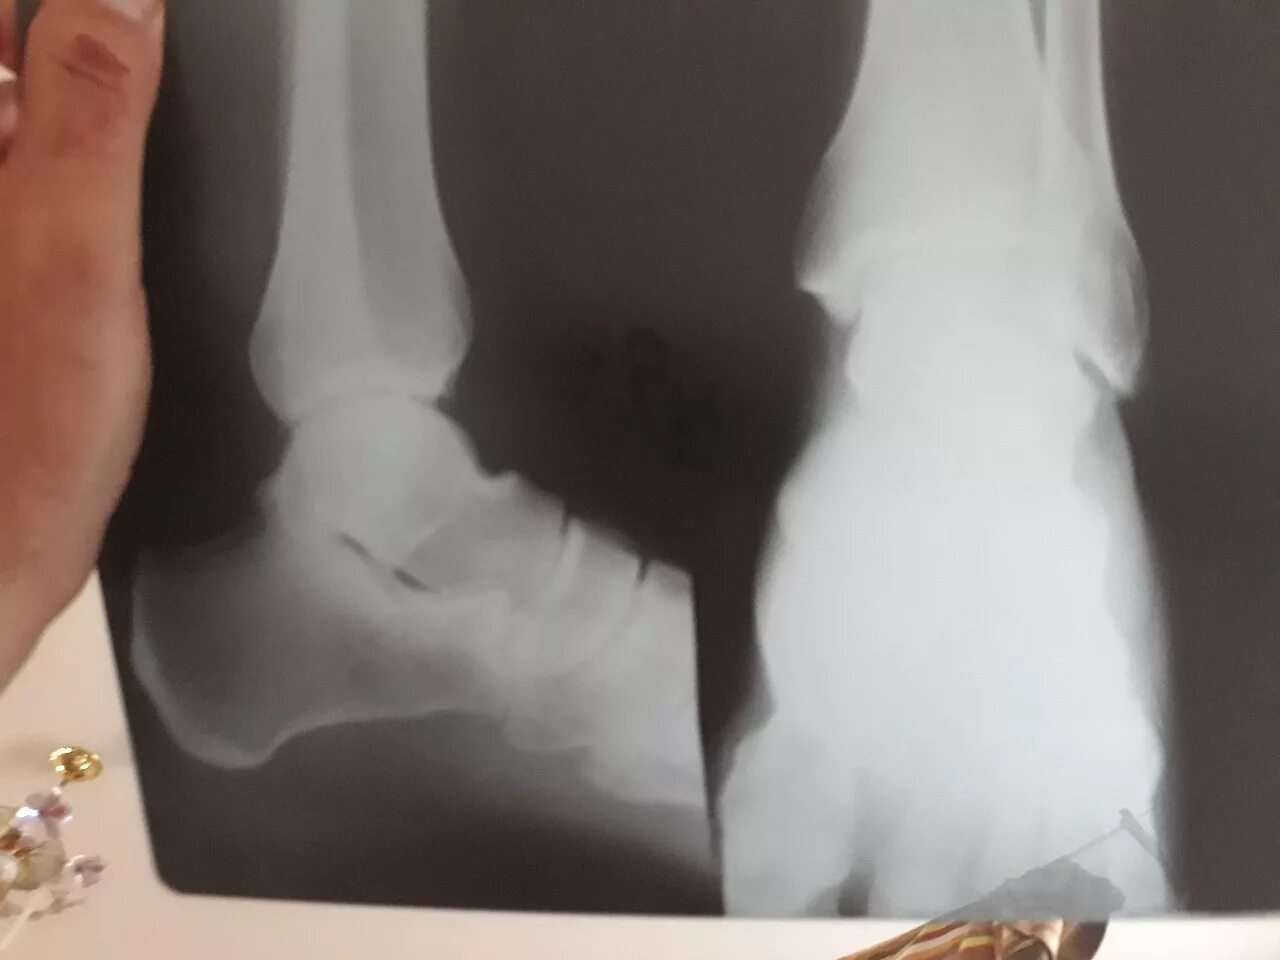 Снимок перелома ноги рентгеновский. Снимок сломанной ноги рентген. Перелом ноги рентген снимки.